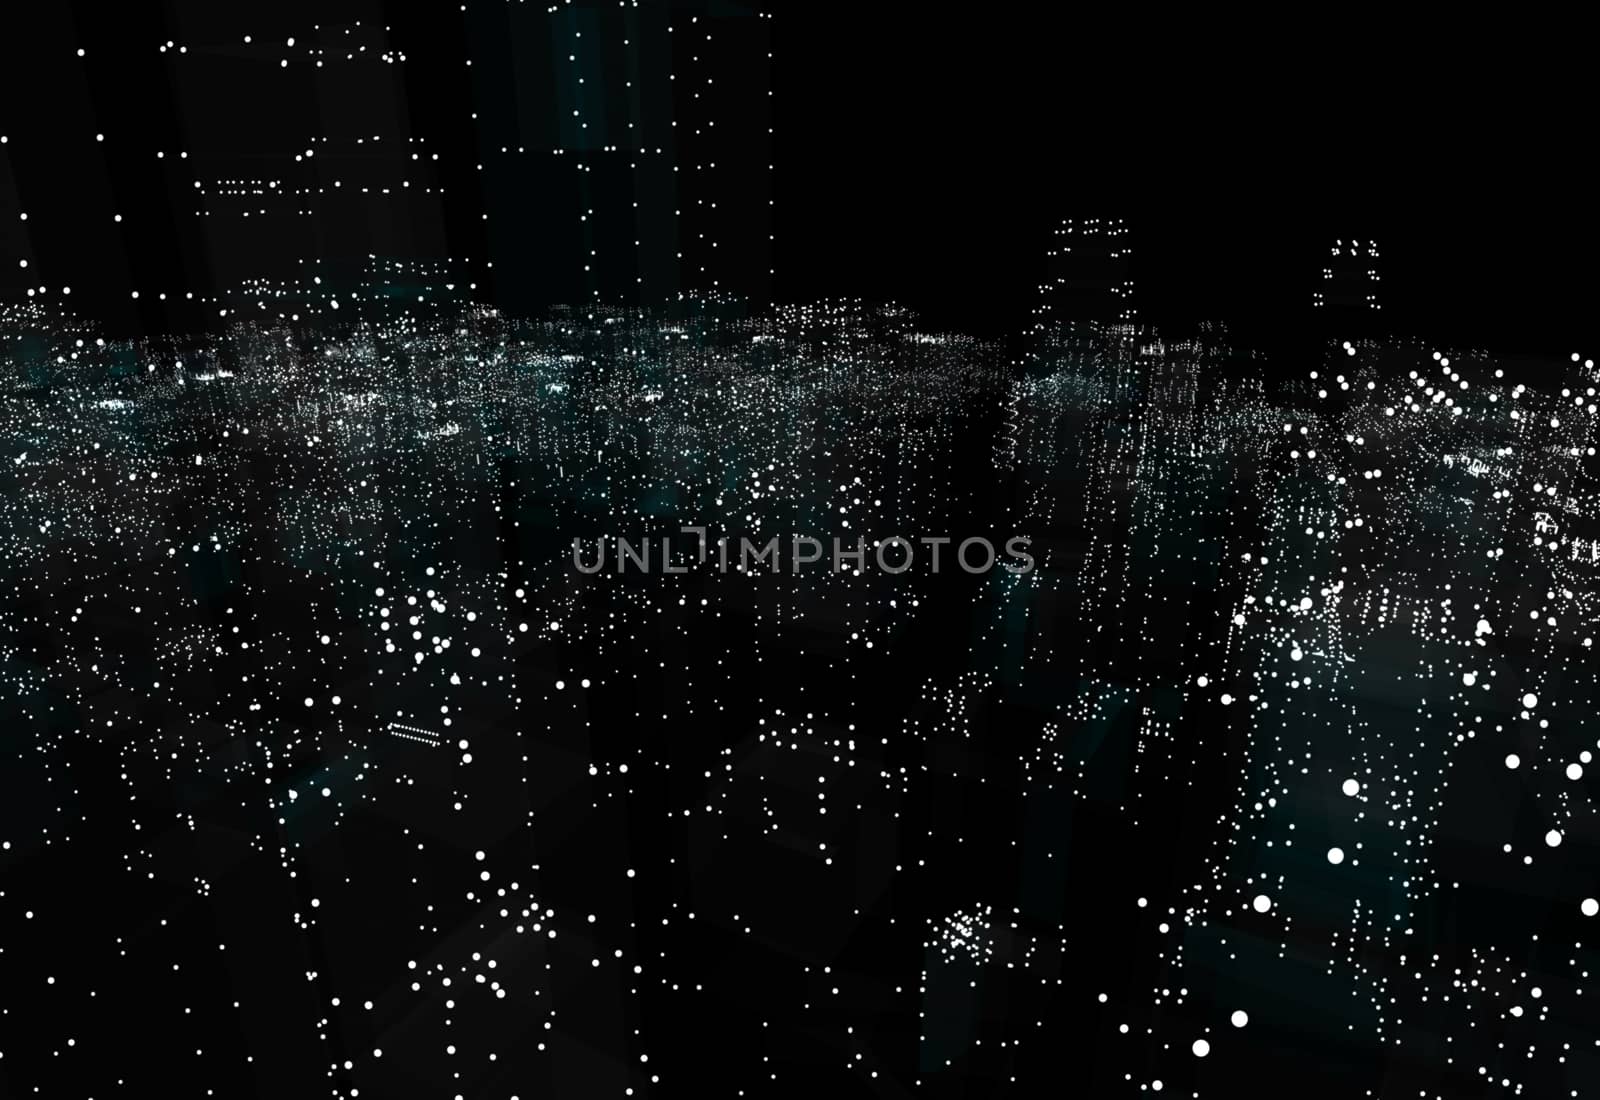 Illuminated night city skyline on black background. 3d illustration